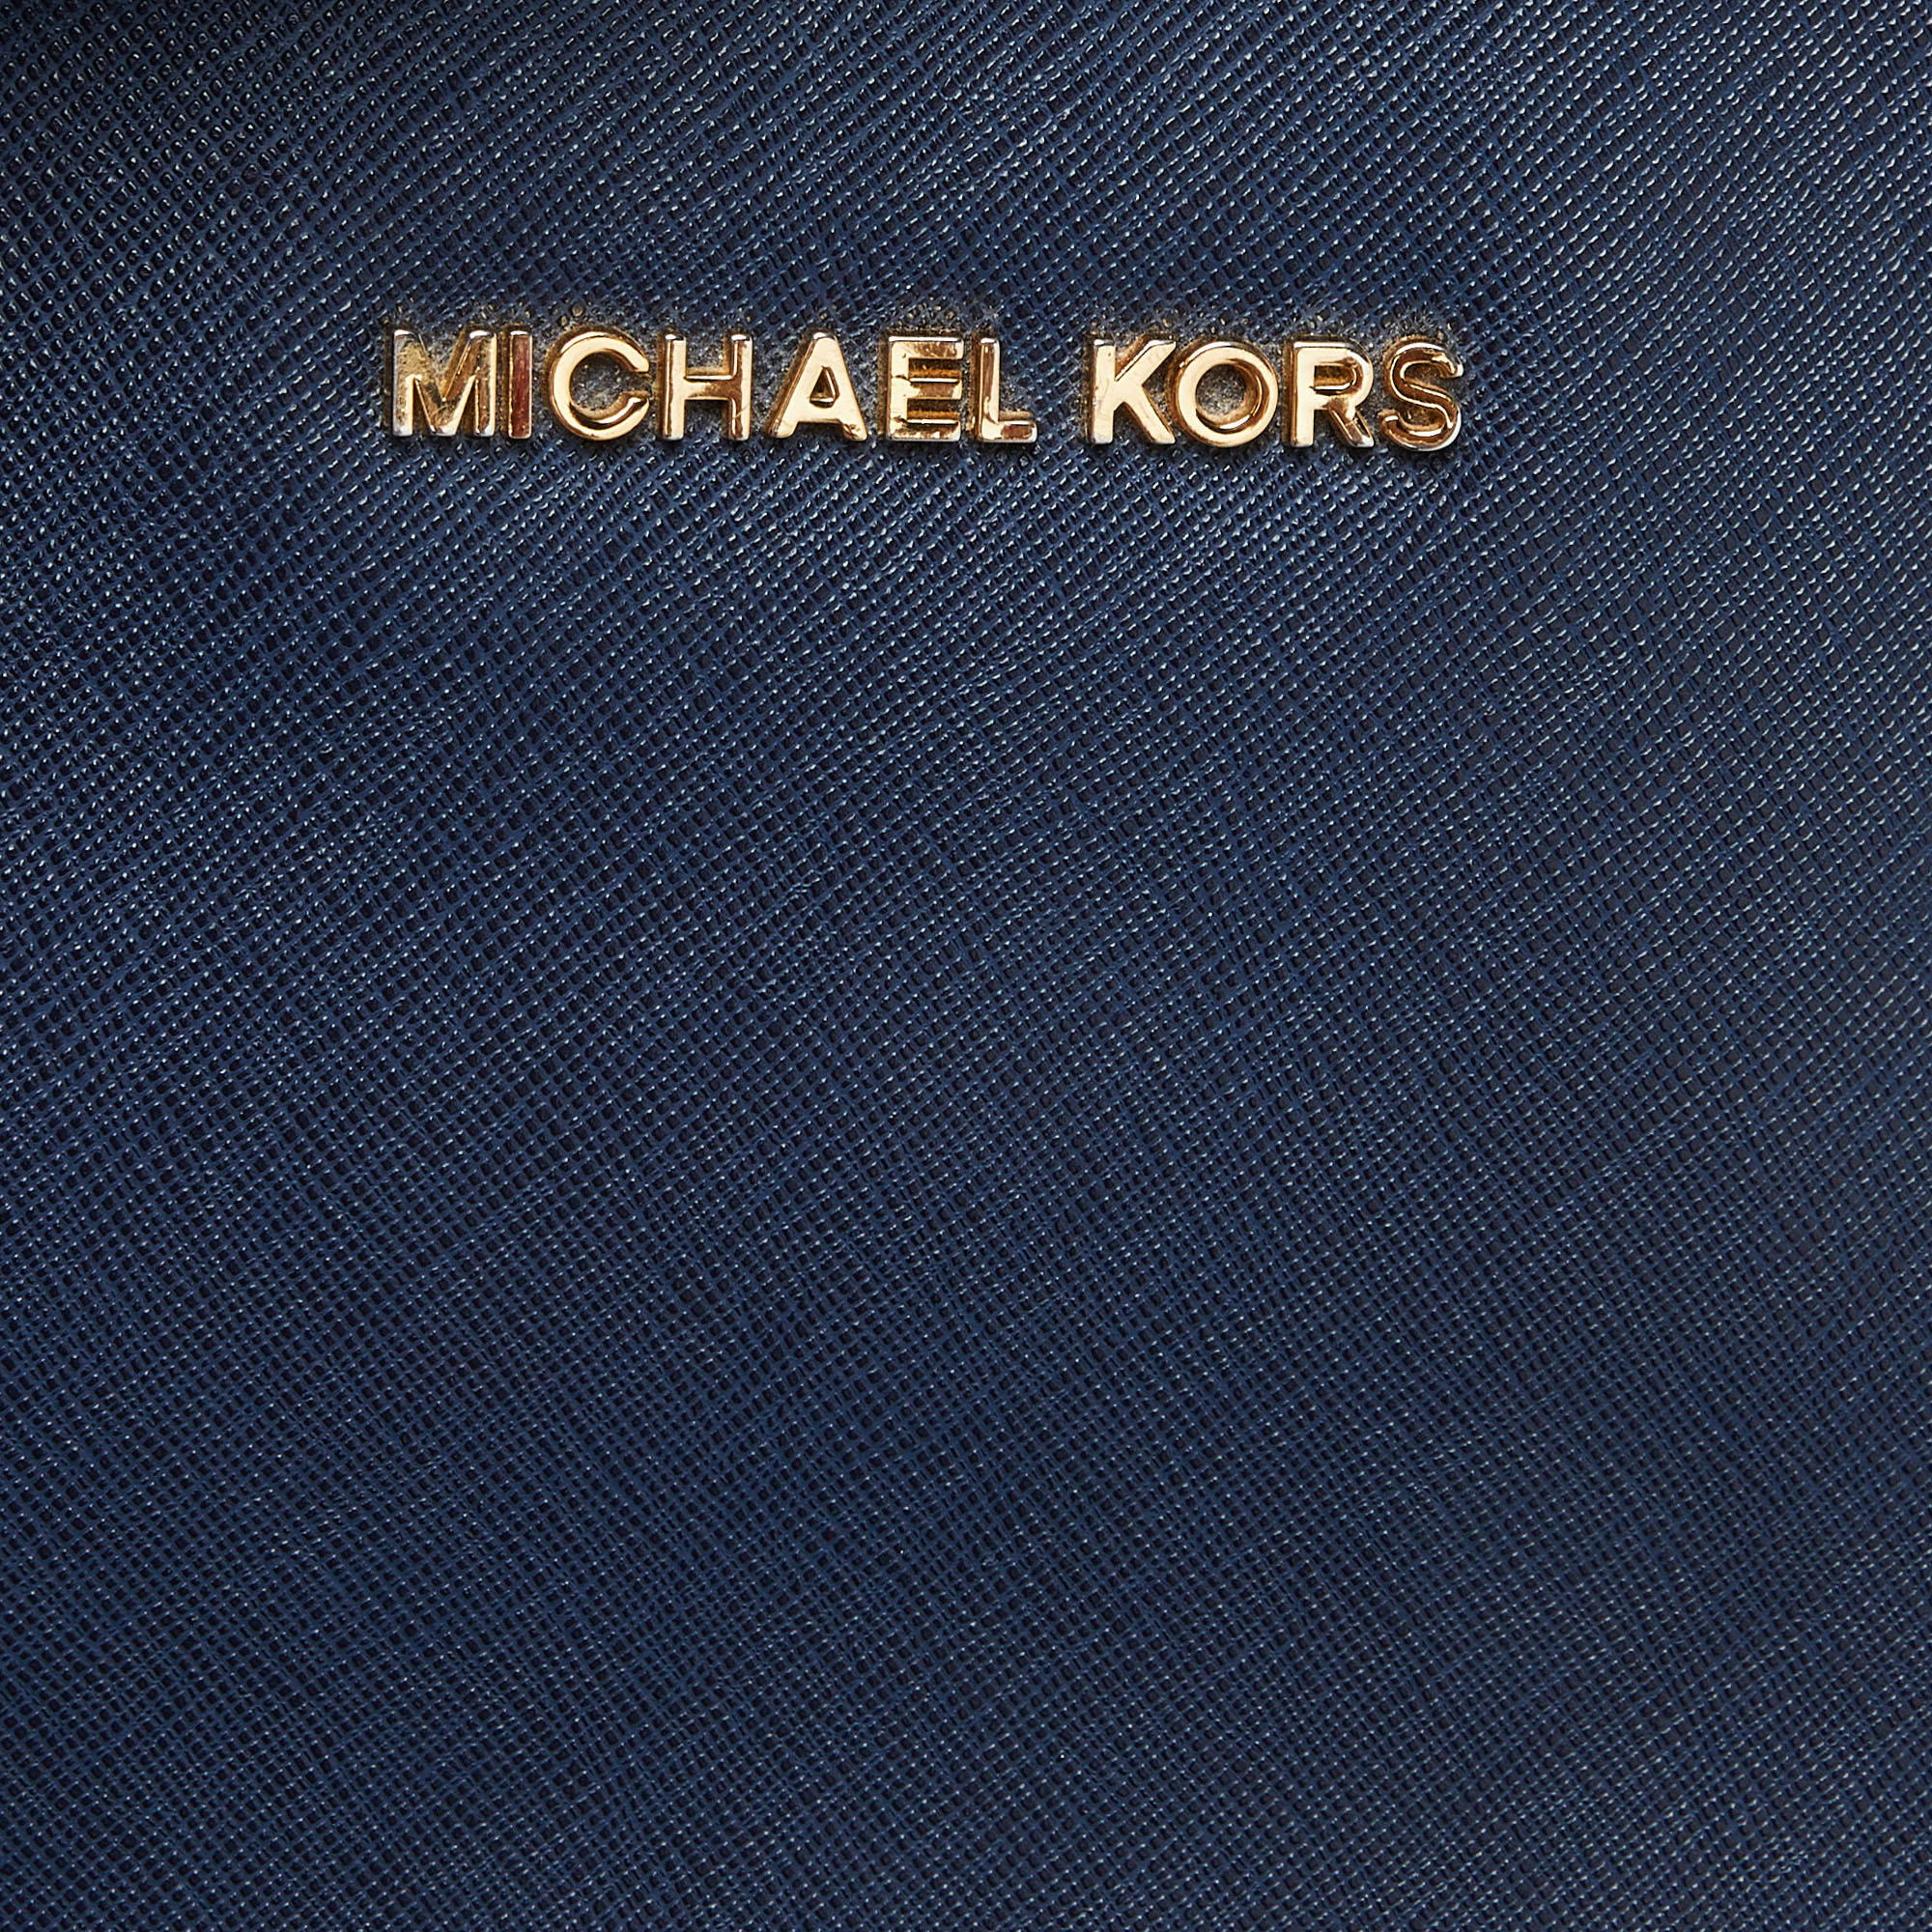 Michael Kors Blue Saffiano Leather Jet Set Camera Crossbody Bag